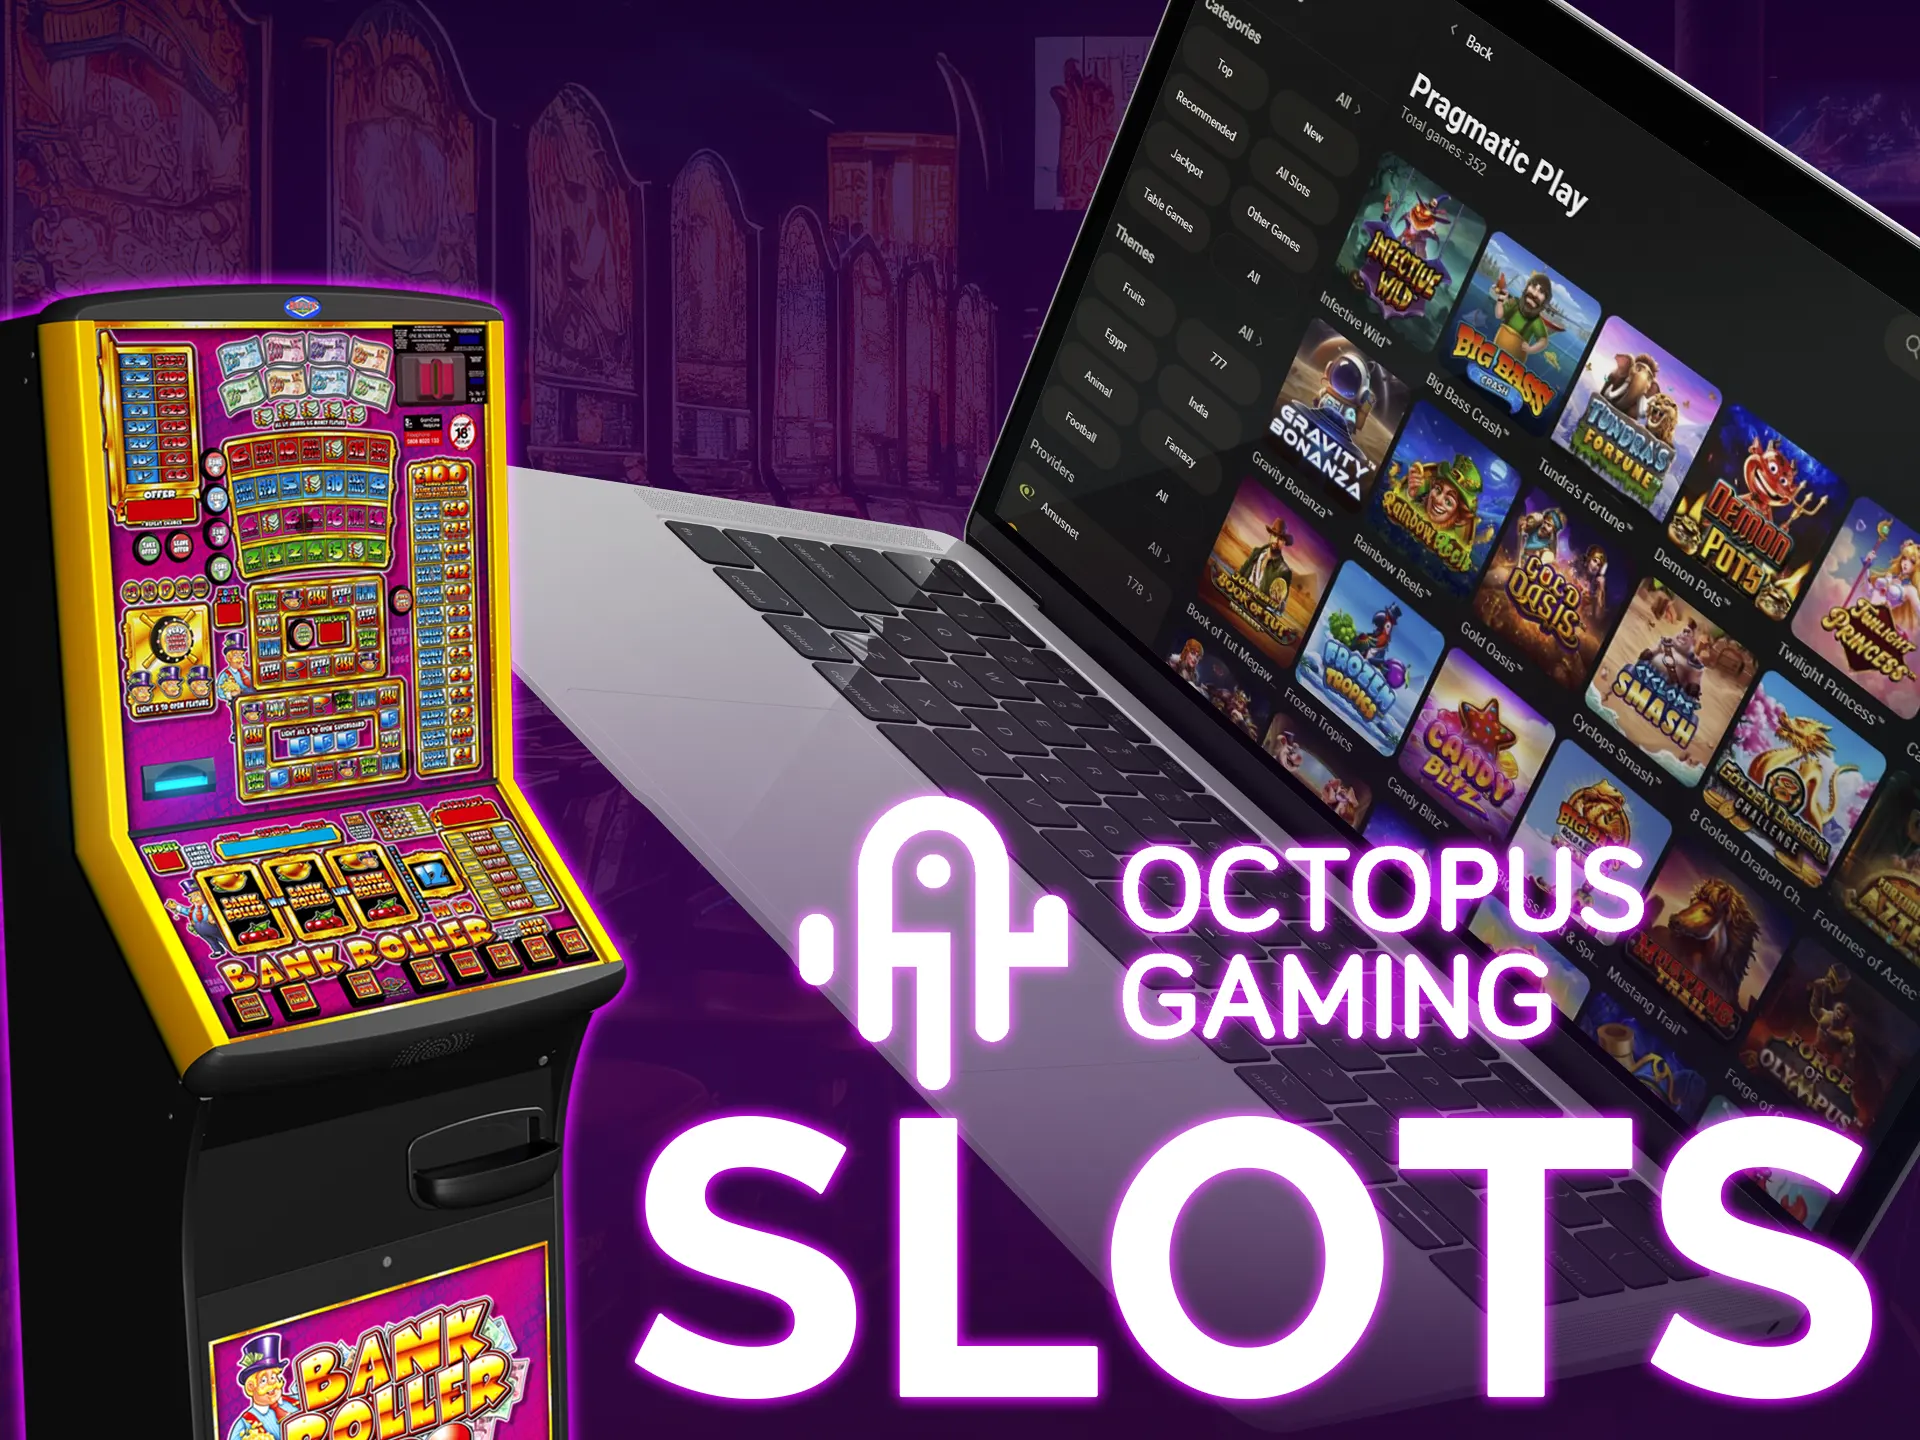 Enjoy Octopus Gaming slots!